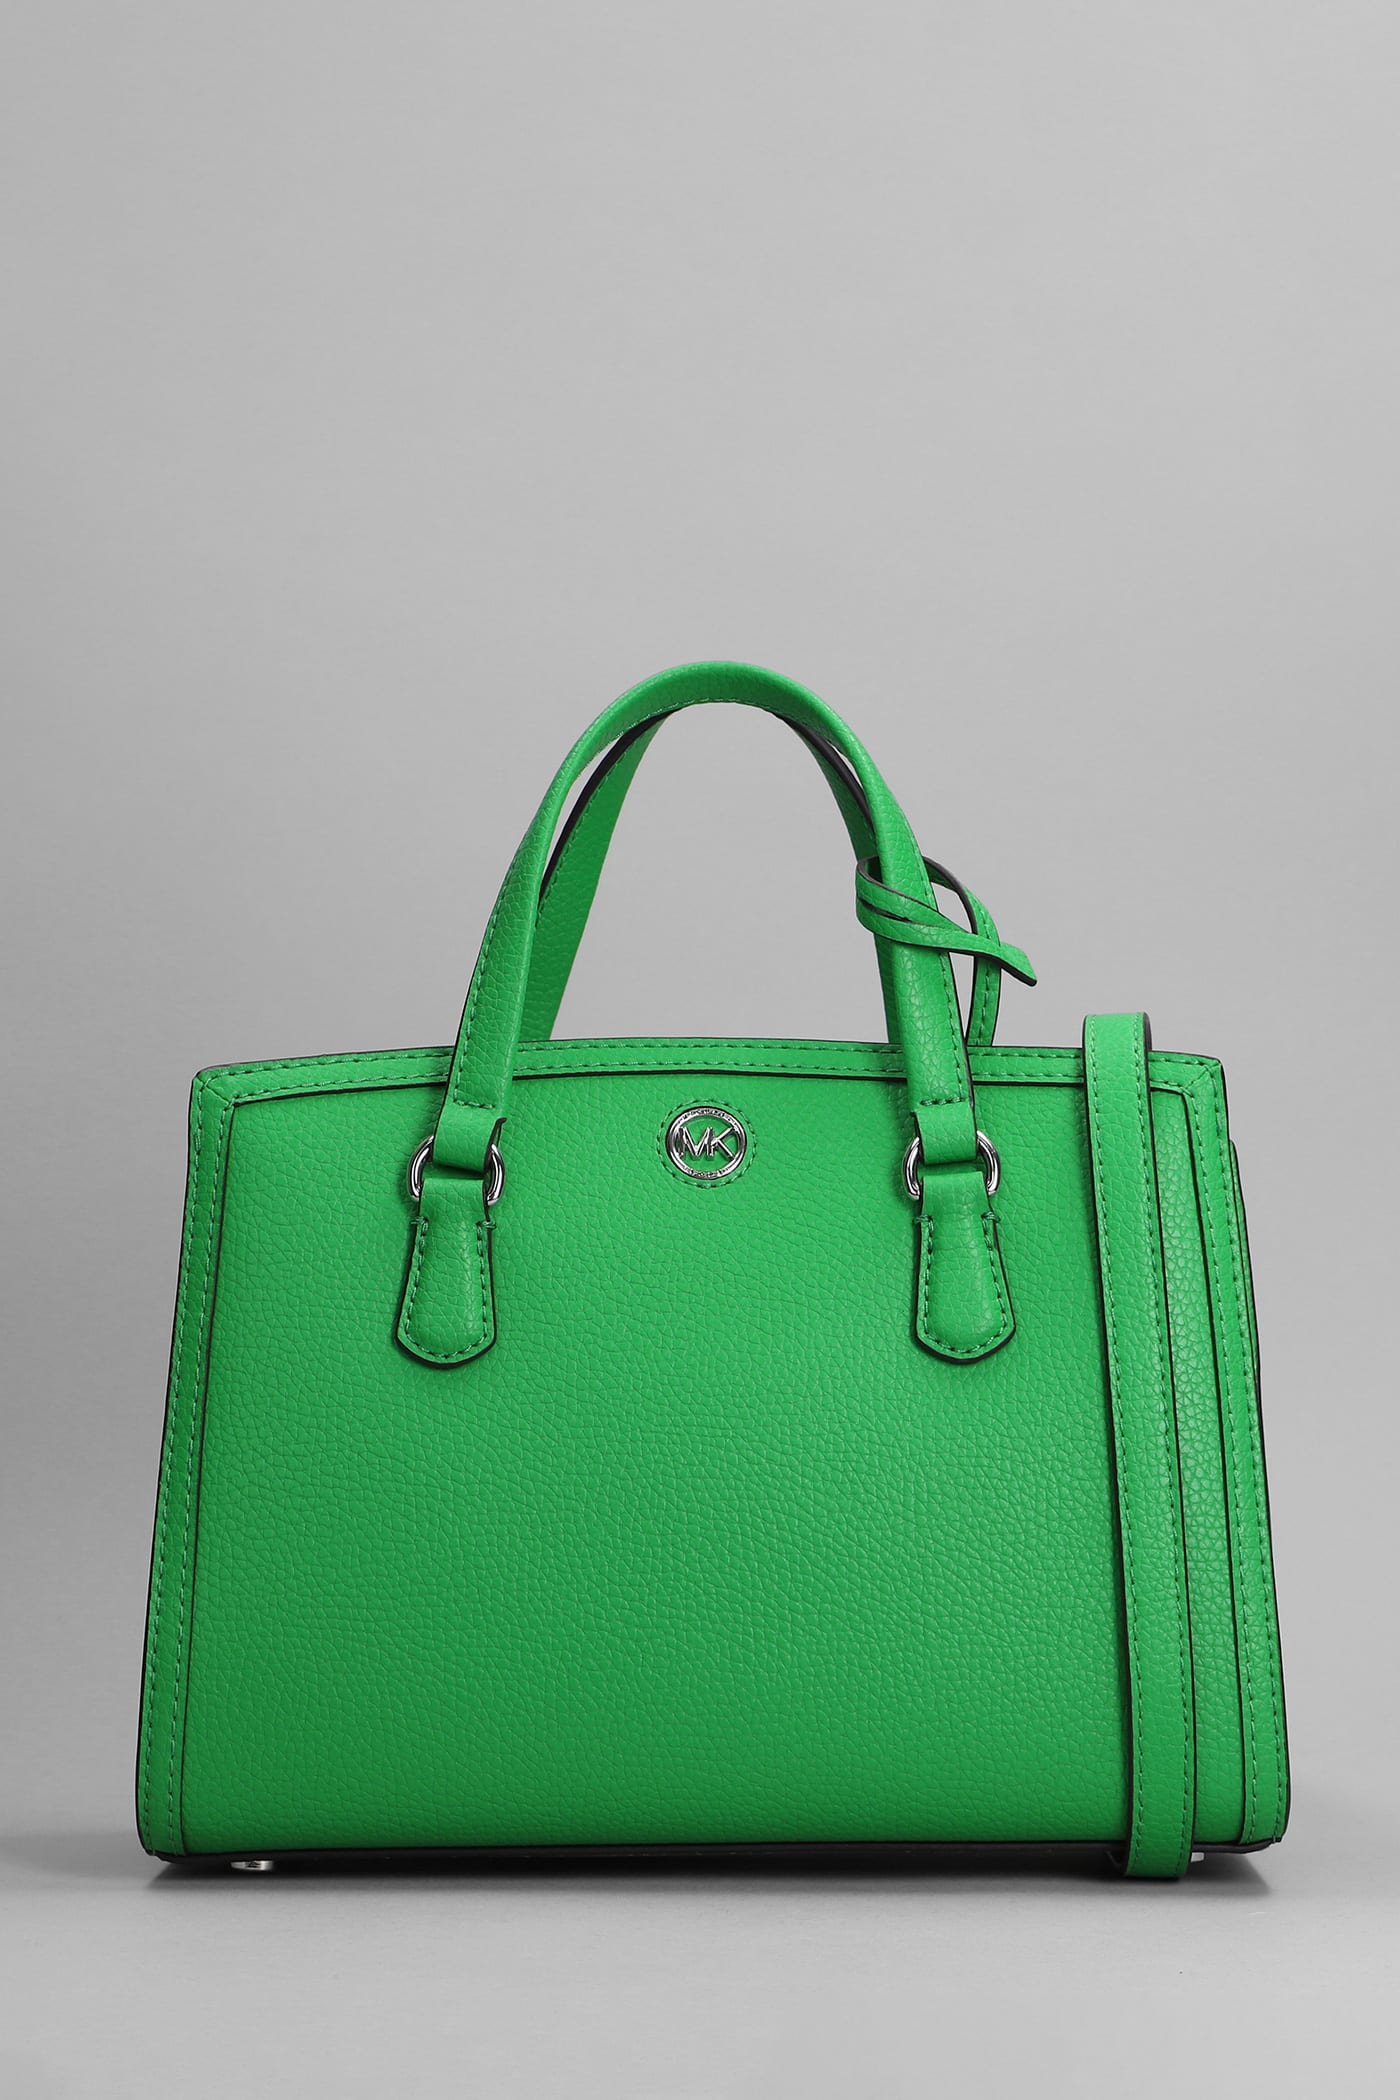 Michael Kors Chantal Hand Bag In Green Leather